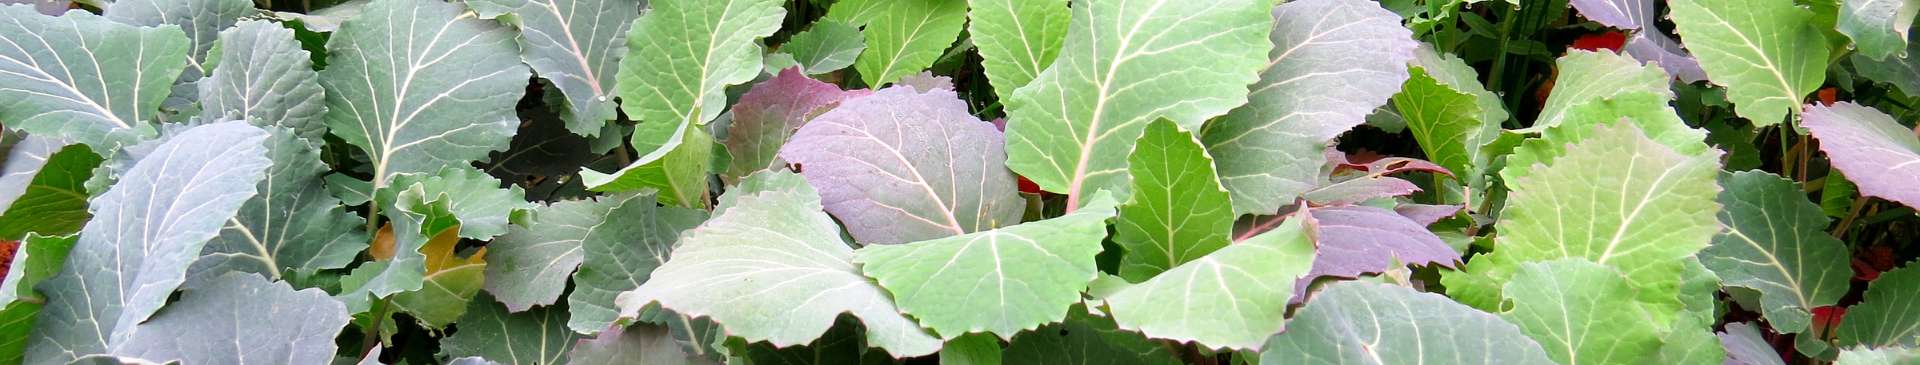 Cabbage Aphids: A Destructive Brassica Pest 